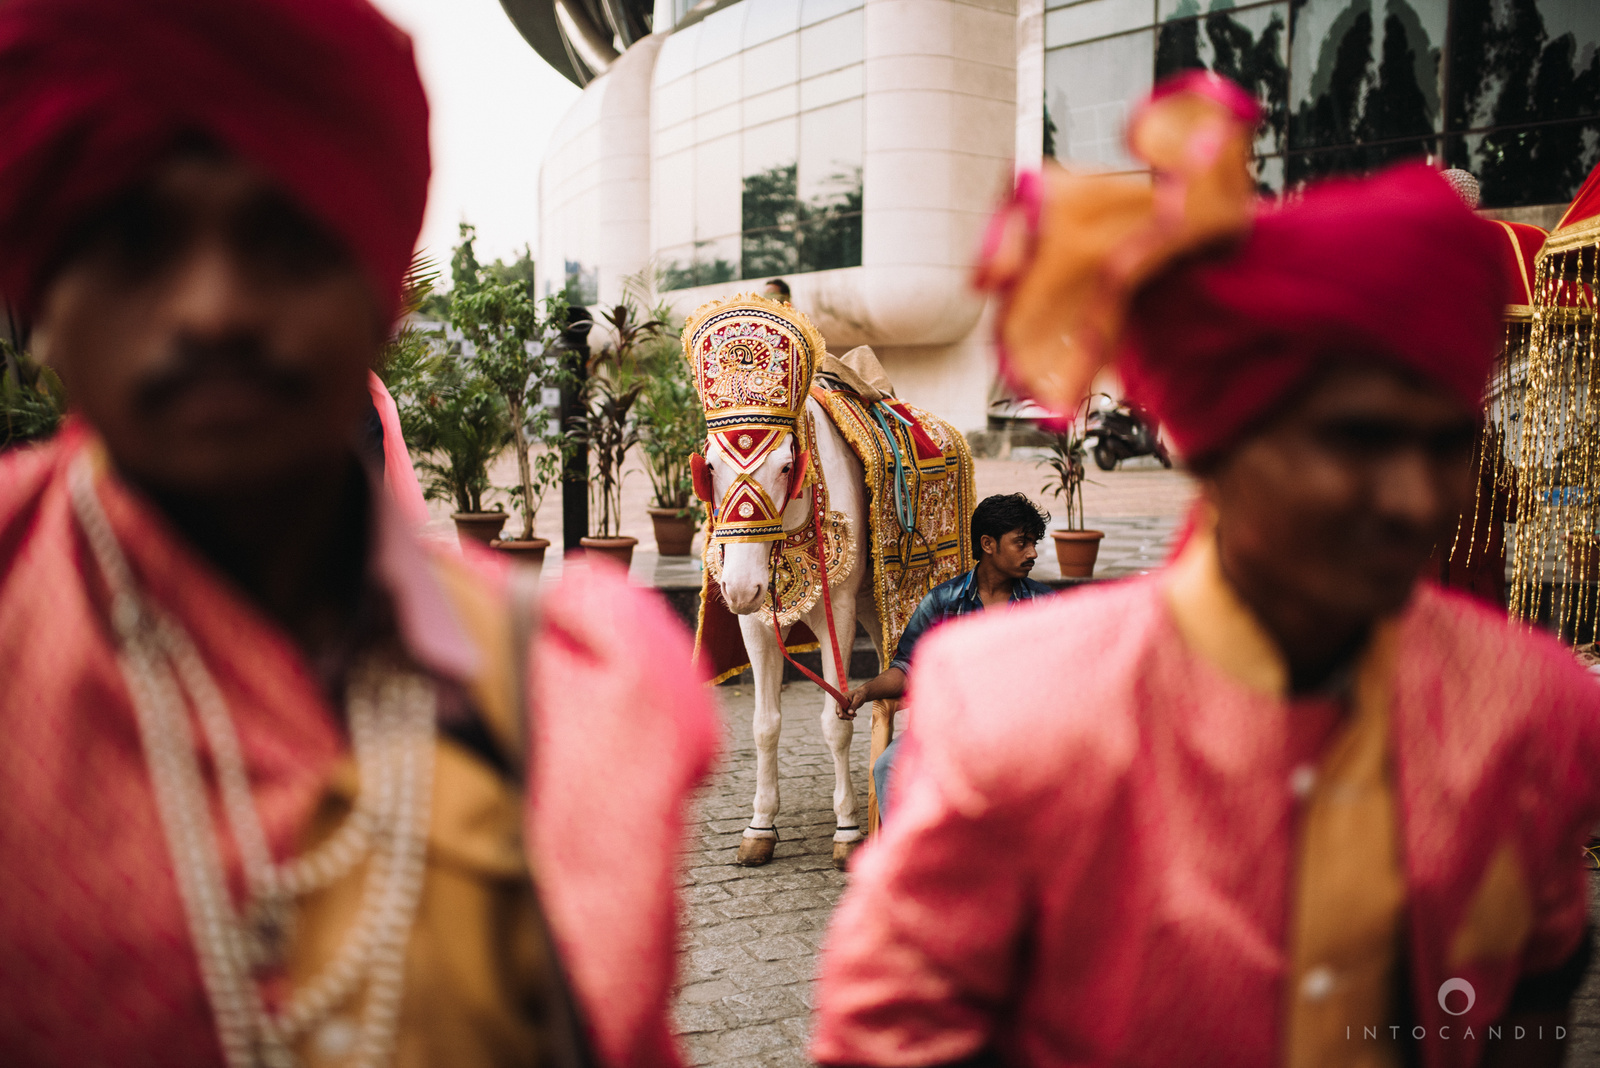 mumbai_wedding_photographer_intocandid_saharastar_ketan_manasvi_ts_014.jpg